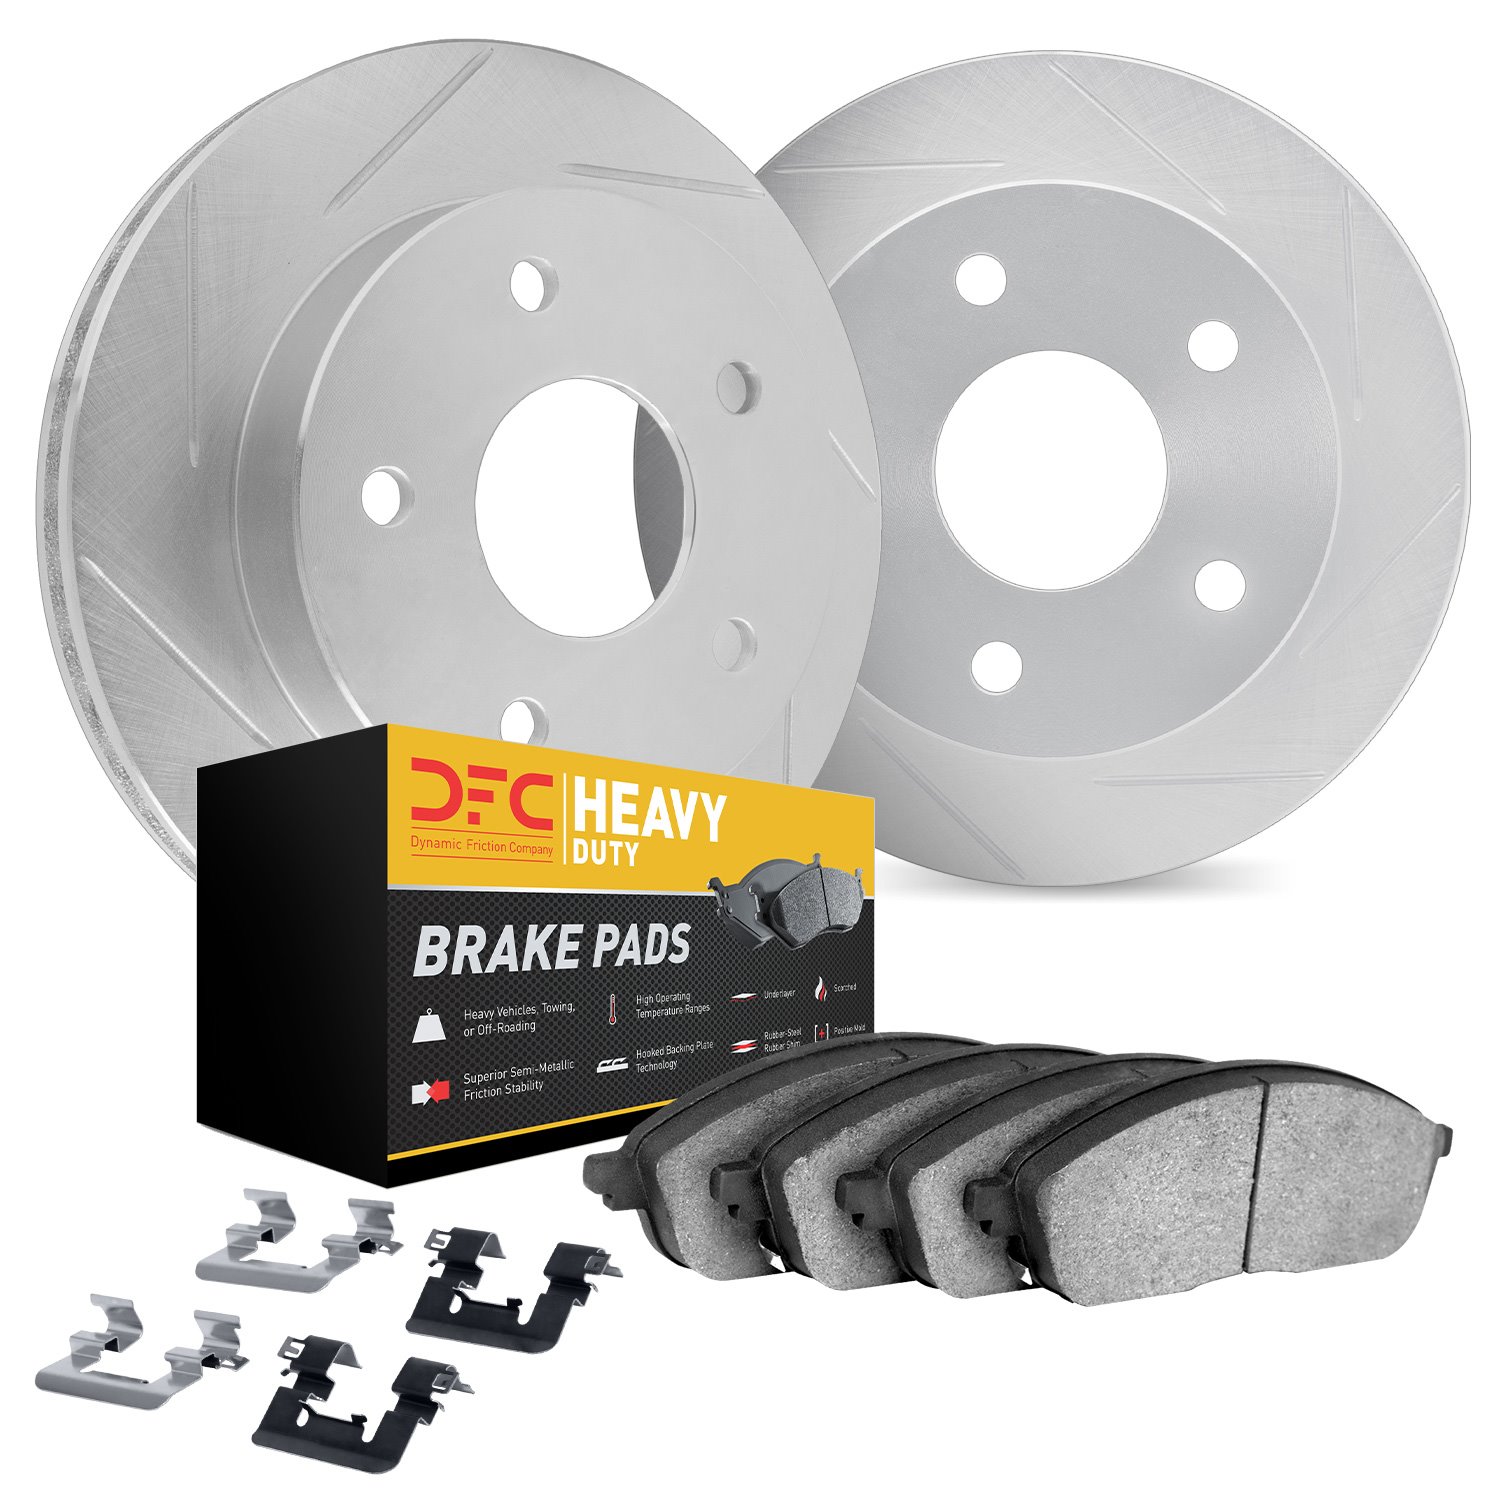 5212-99242 Slotted Brake Rotors w/Heavy-Duty Brake Pads Kits & Hardware [Silver], Fits Select Ford/Lincoln/Mercury/Mazda, Positi